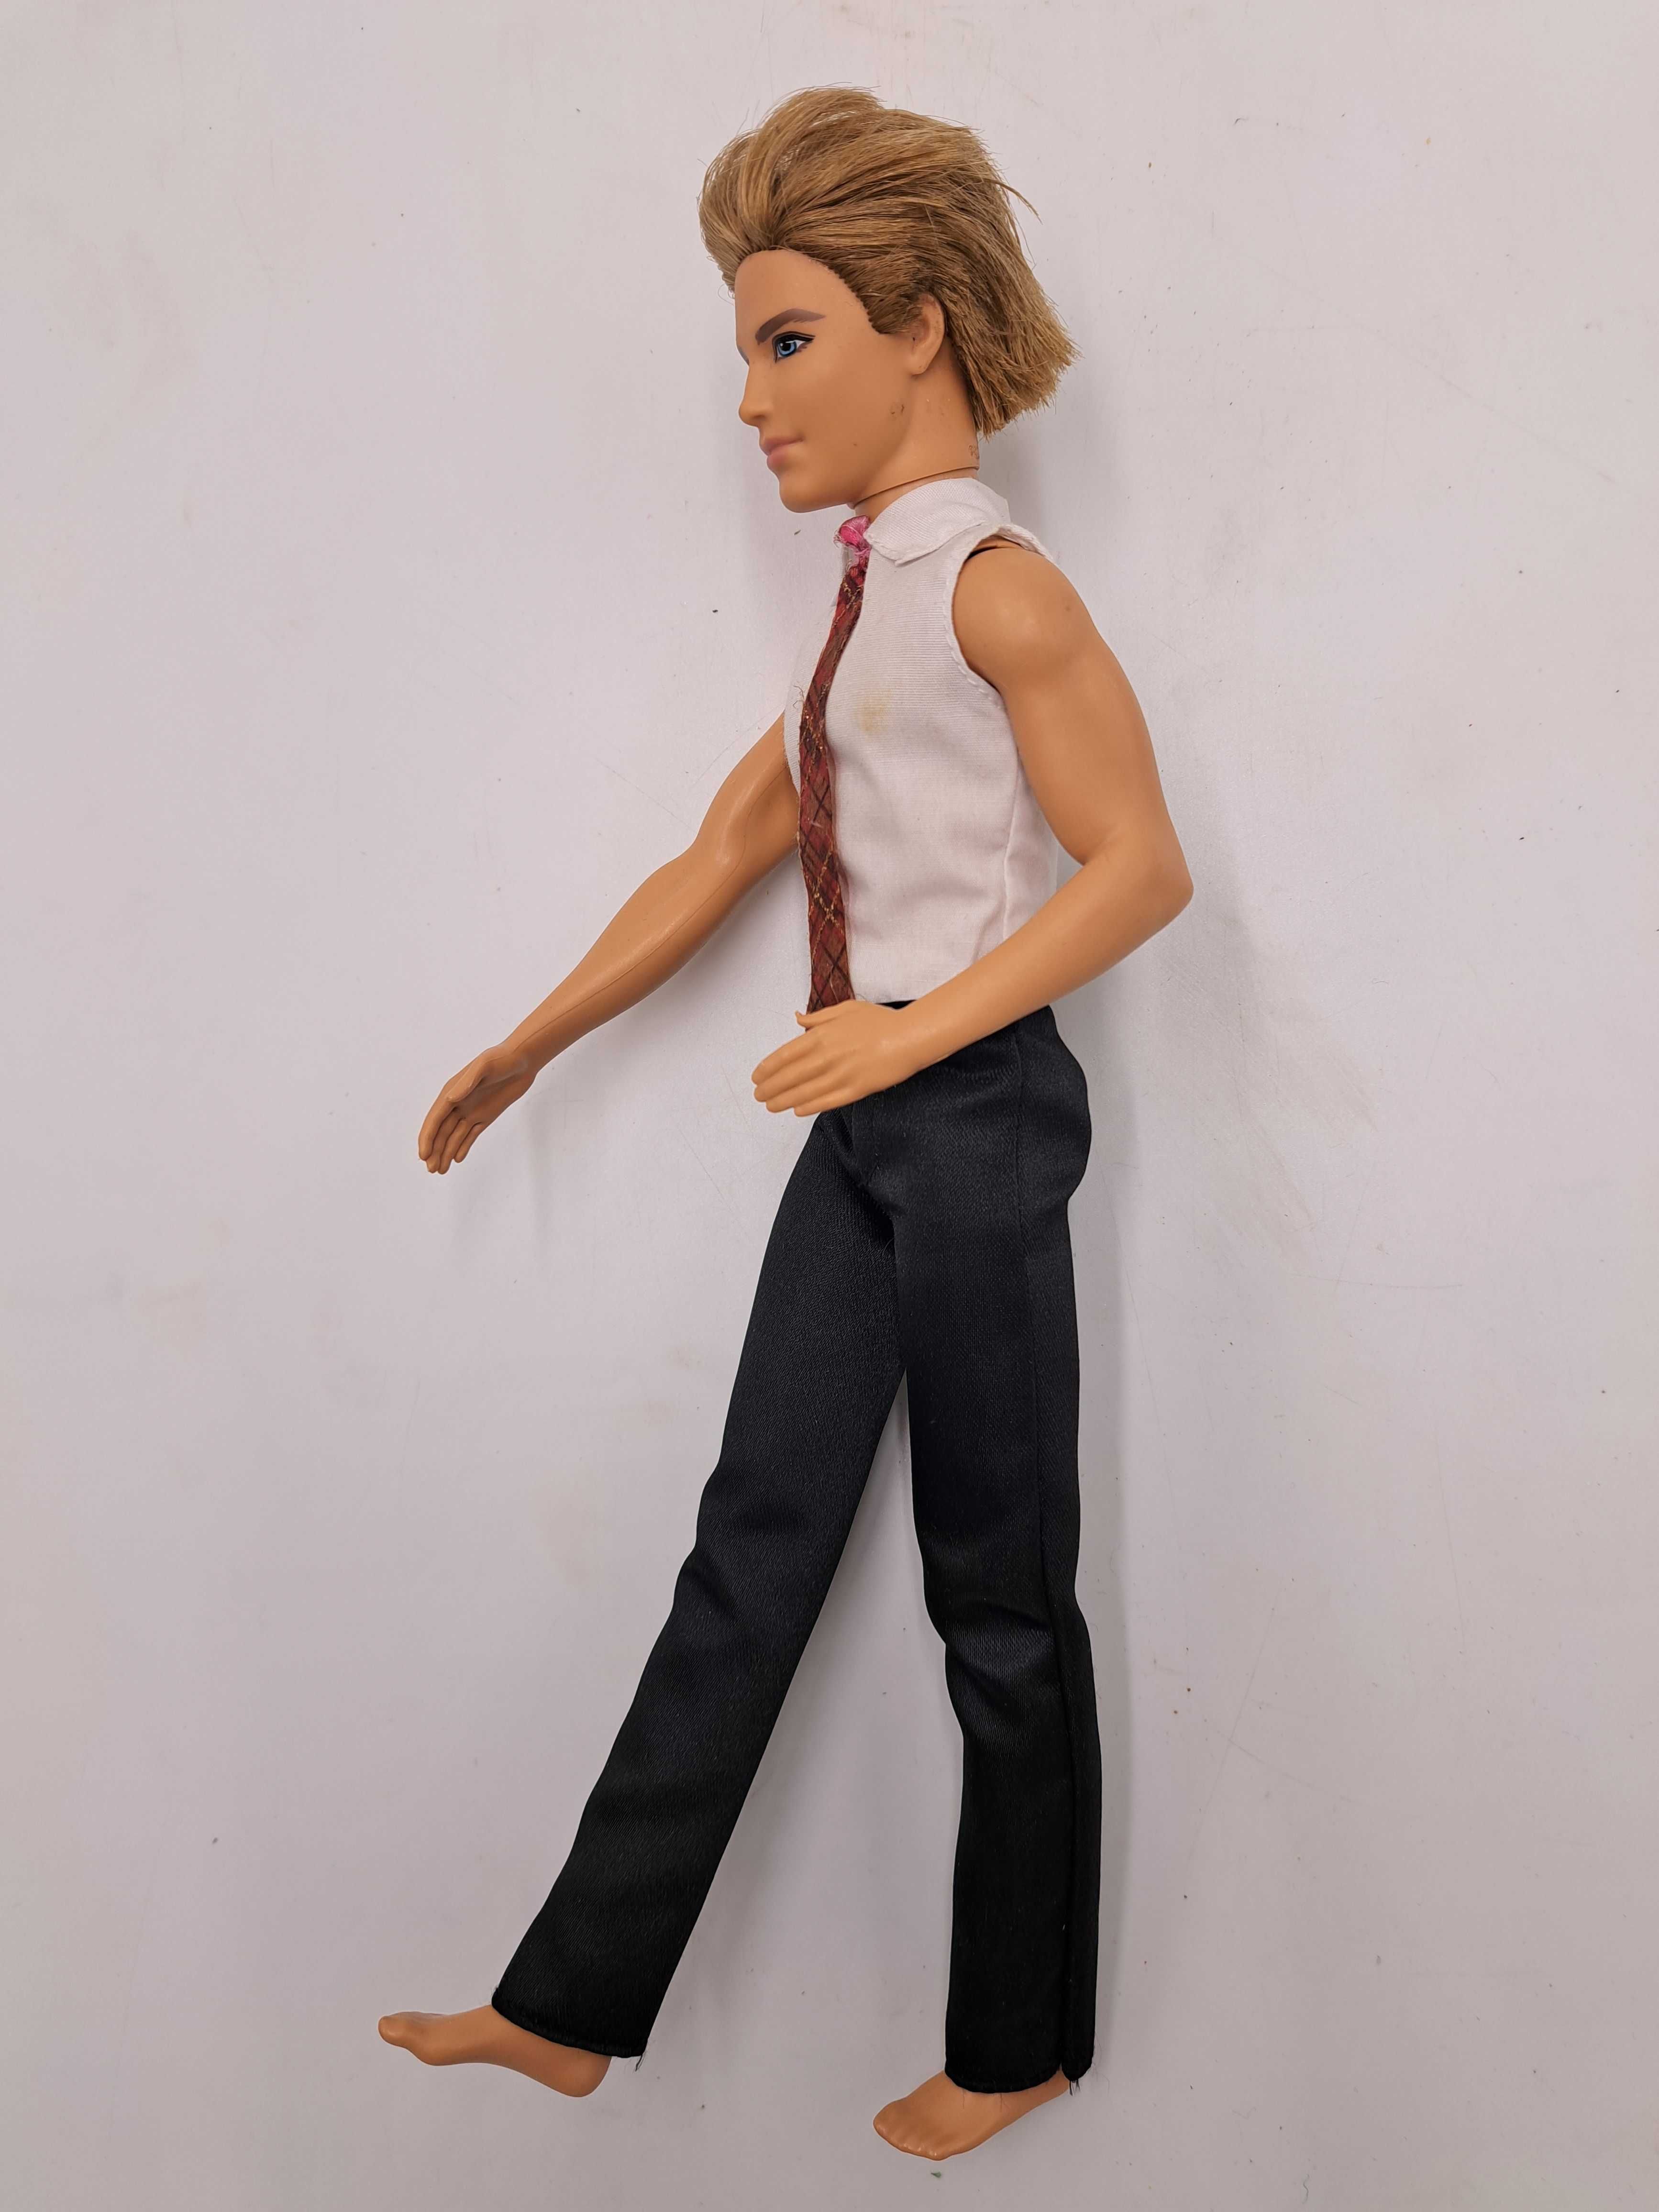 Lalka Barbie Mattel Ken biała koszula krawat